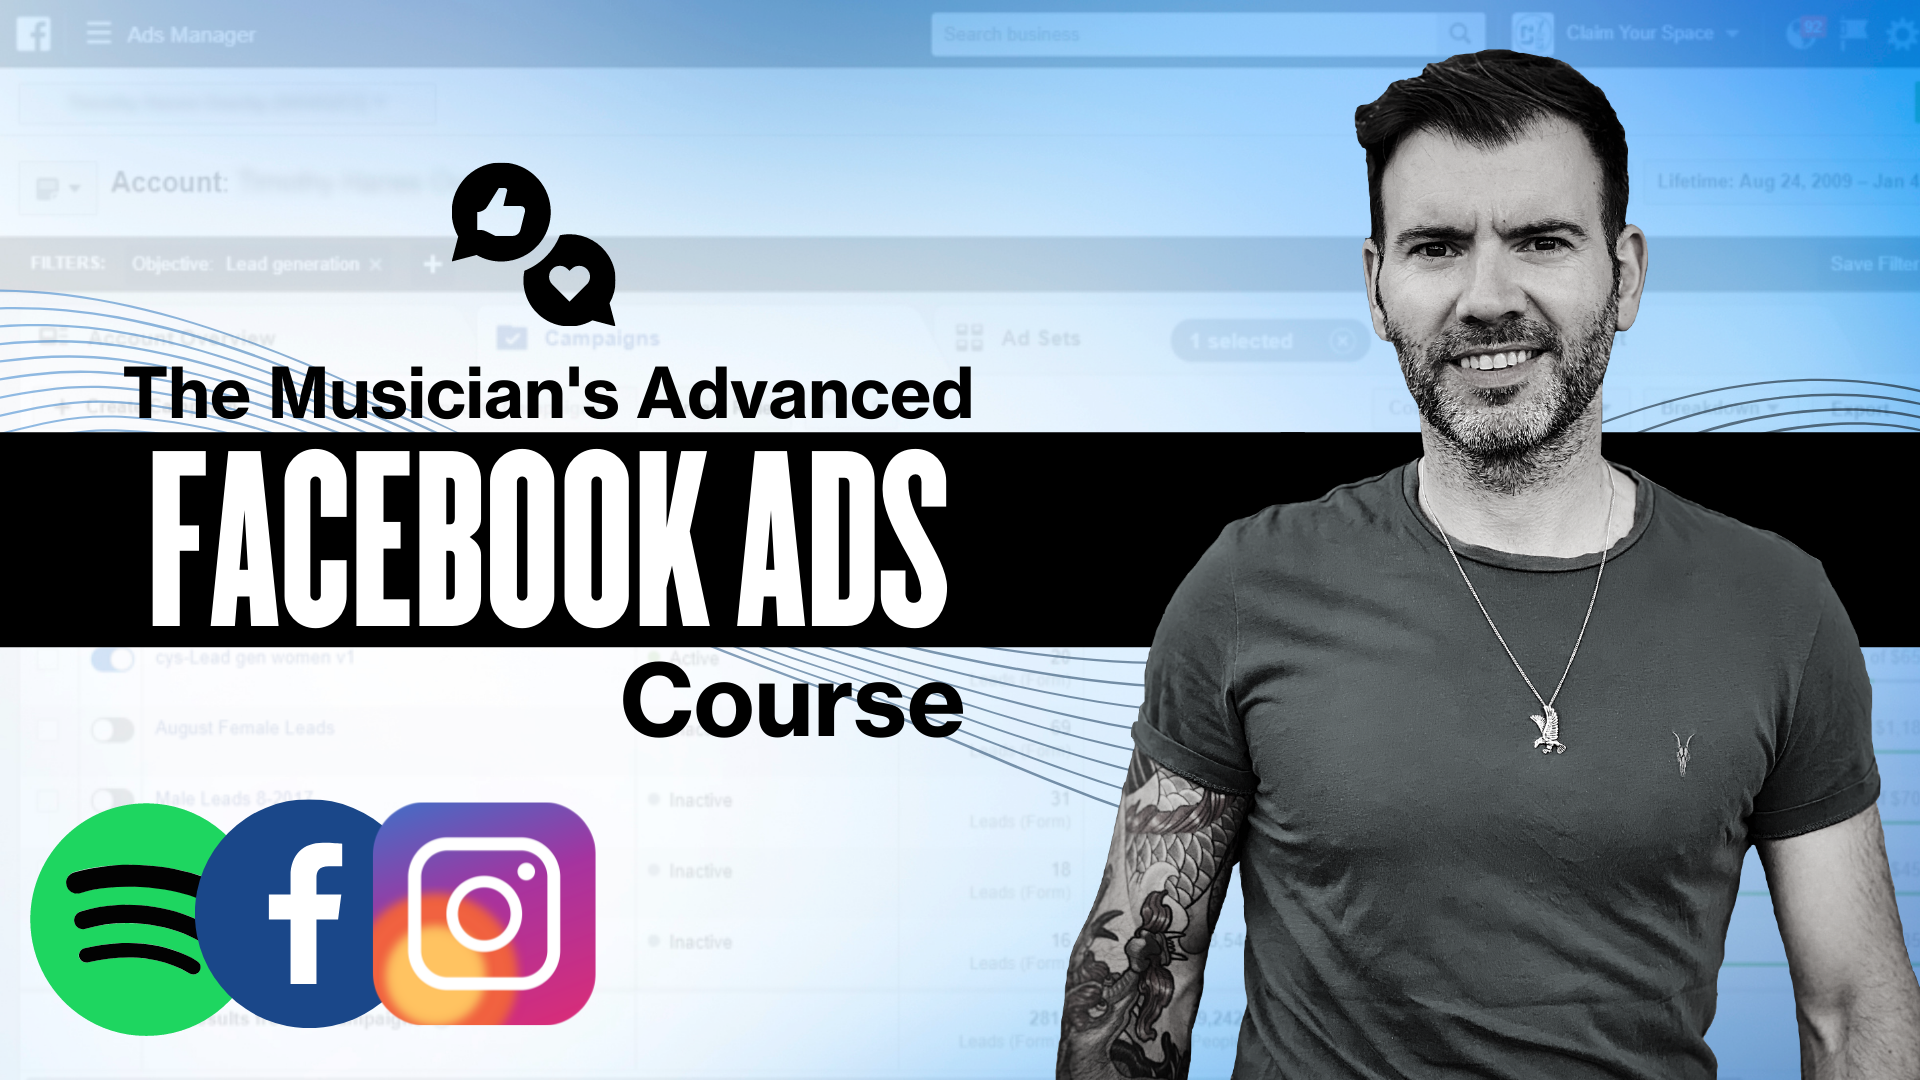 The Musician's Advanced Facebook Advertising Course